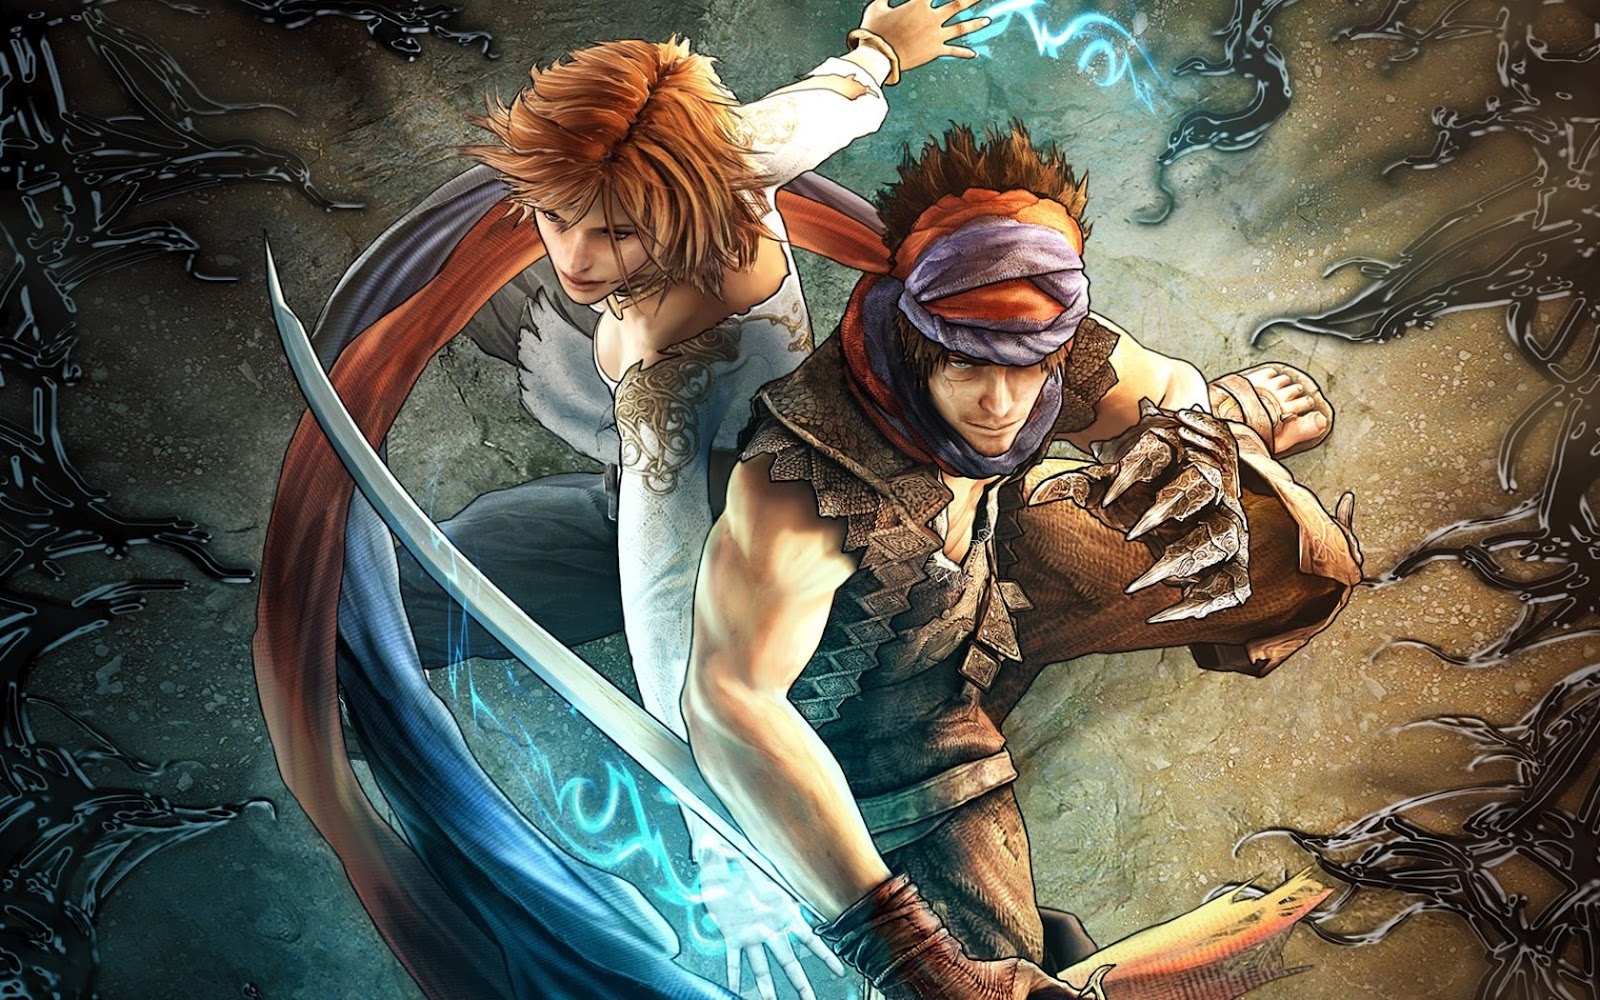 prince wallpaper hd,action adventure game,cg artwork,illustration,adventure game,mythology